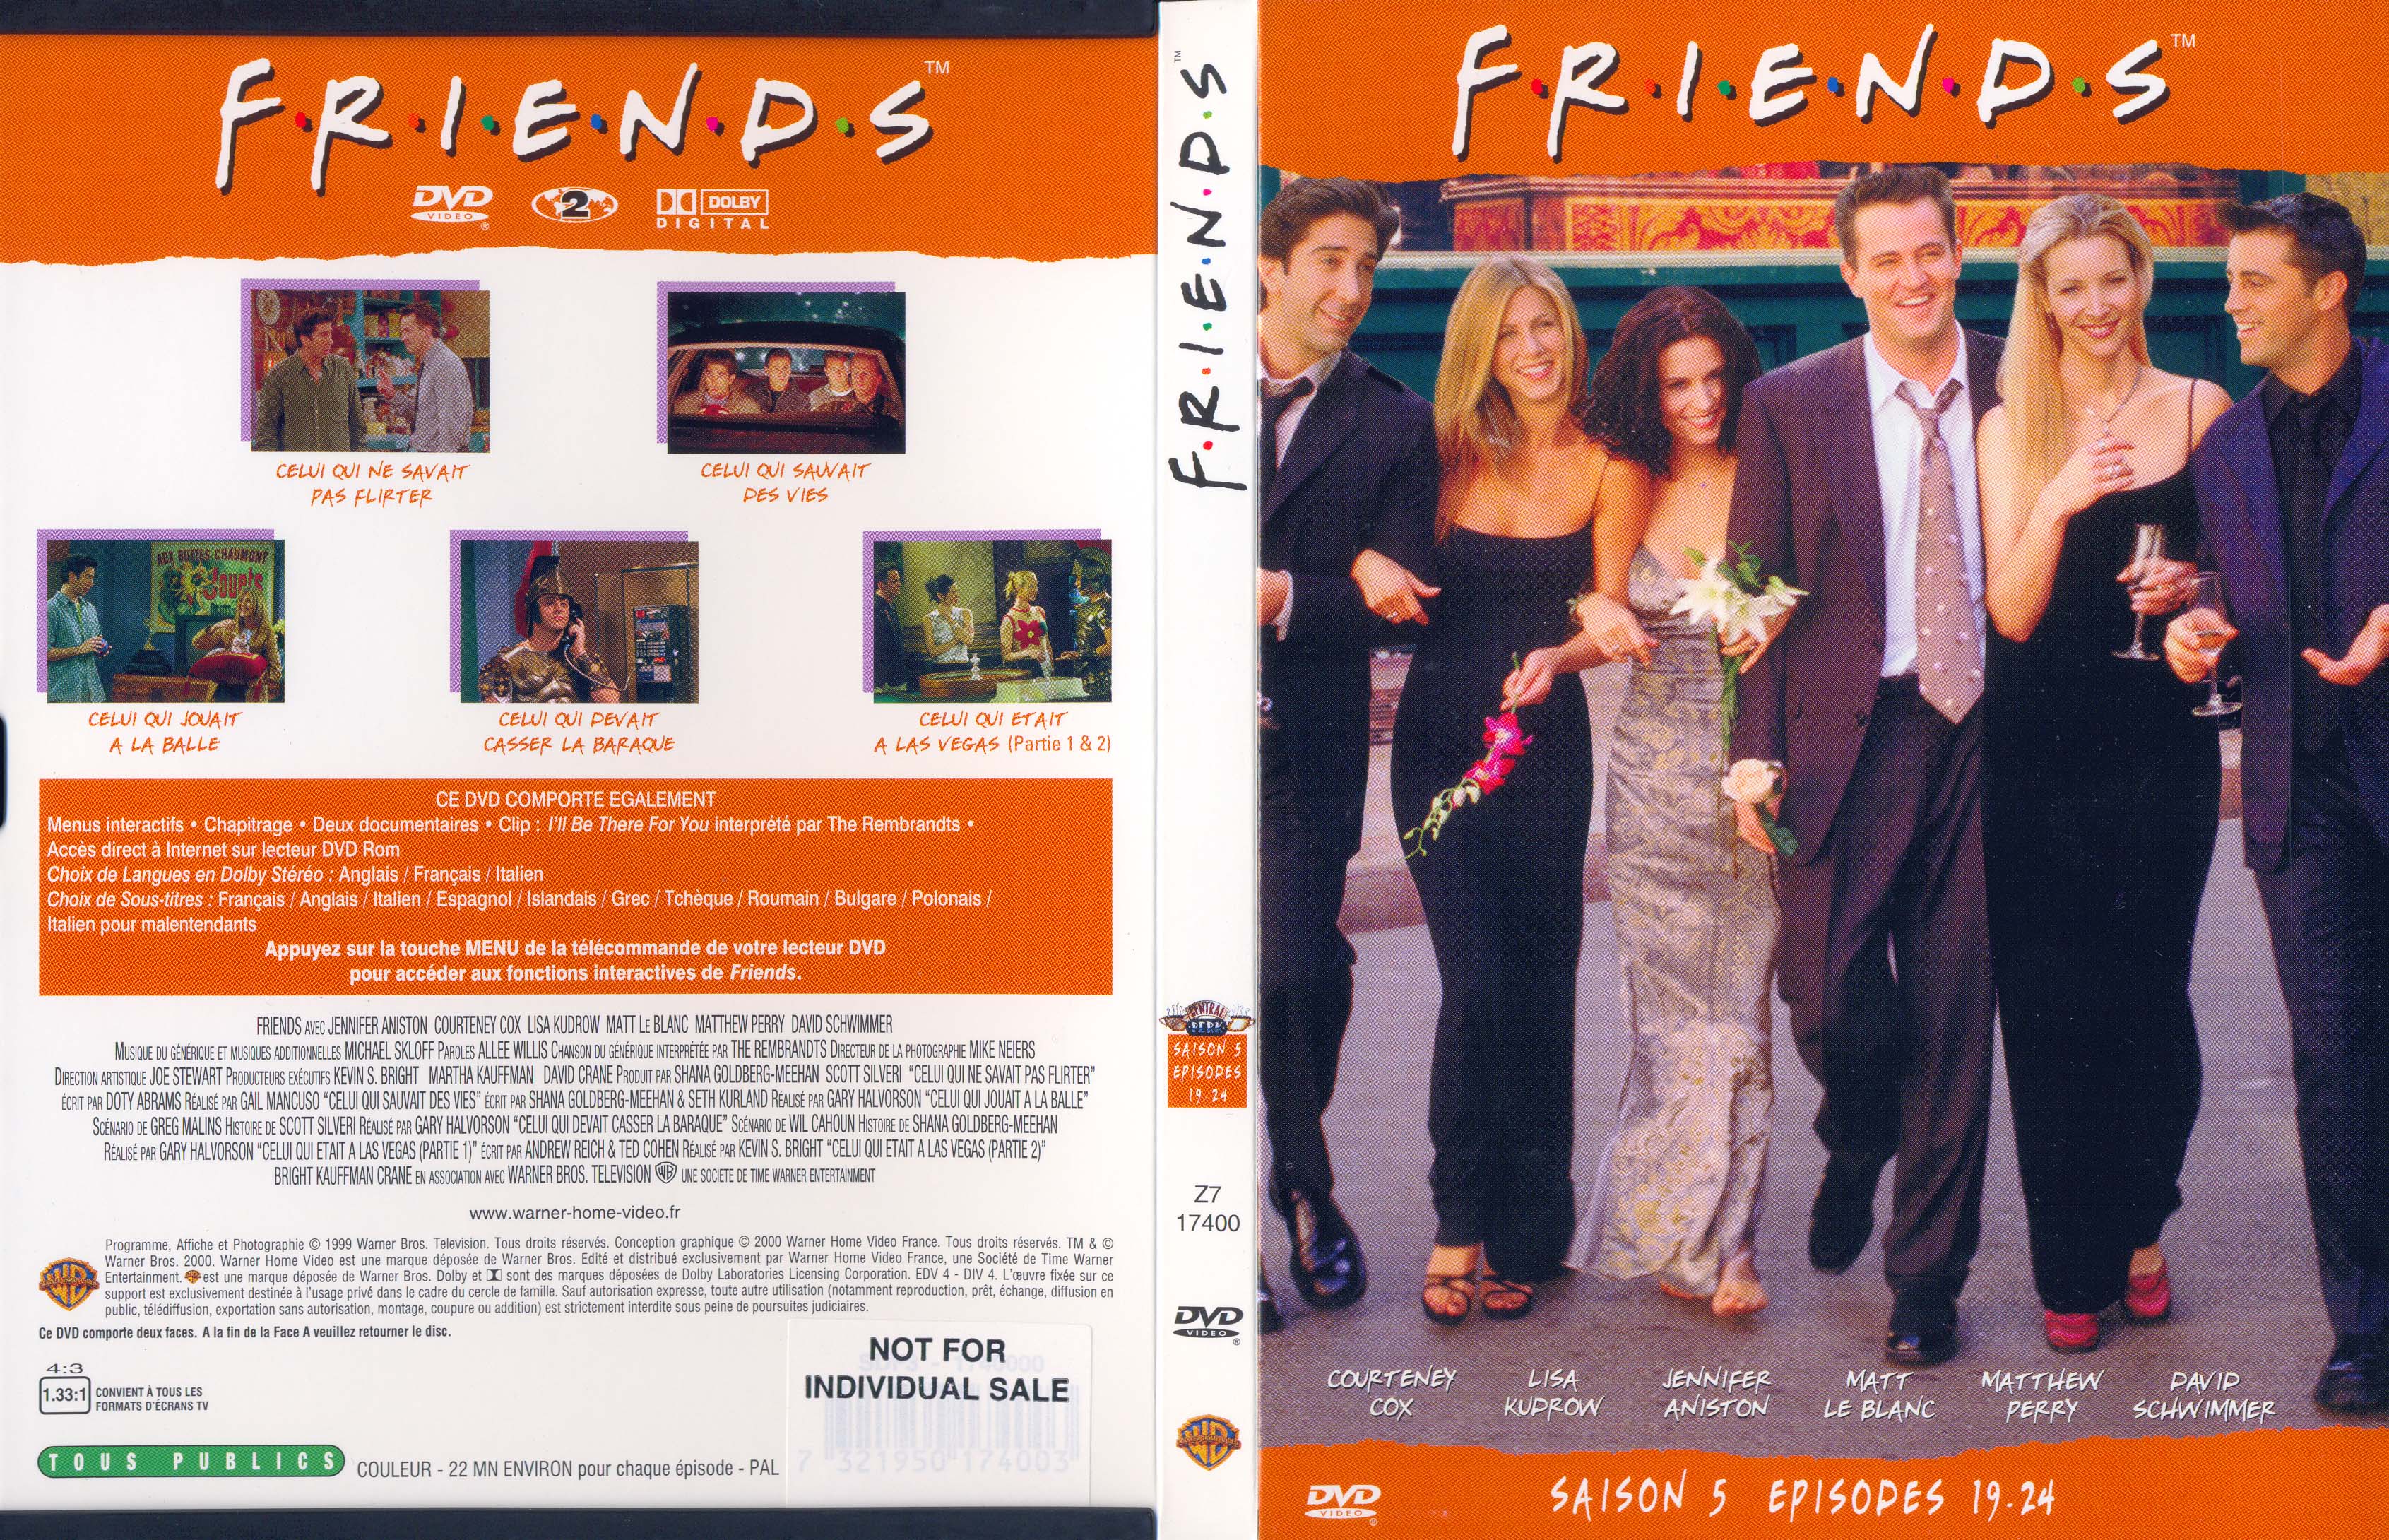 Jaquette DVD Friends saison 5 dvd 4